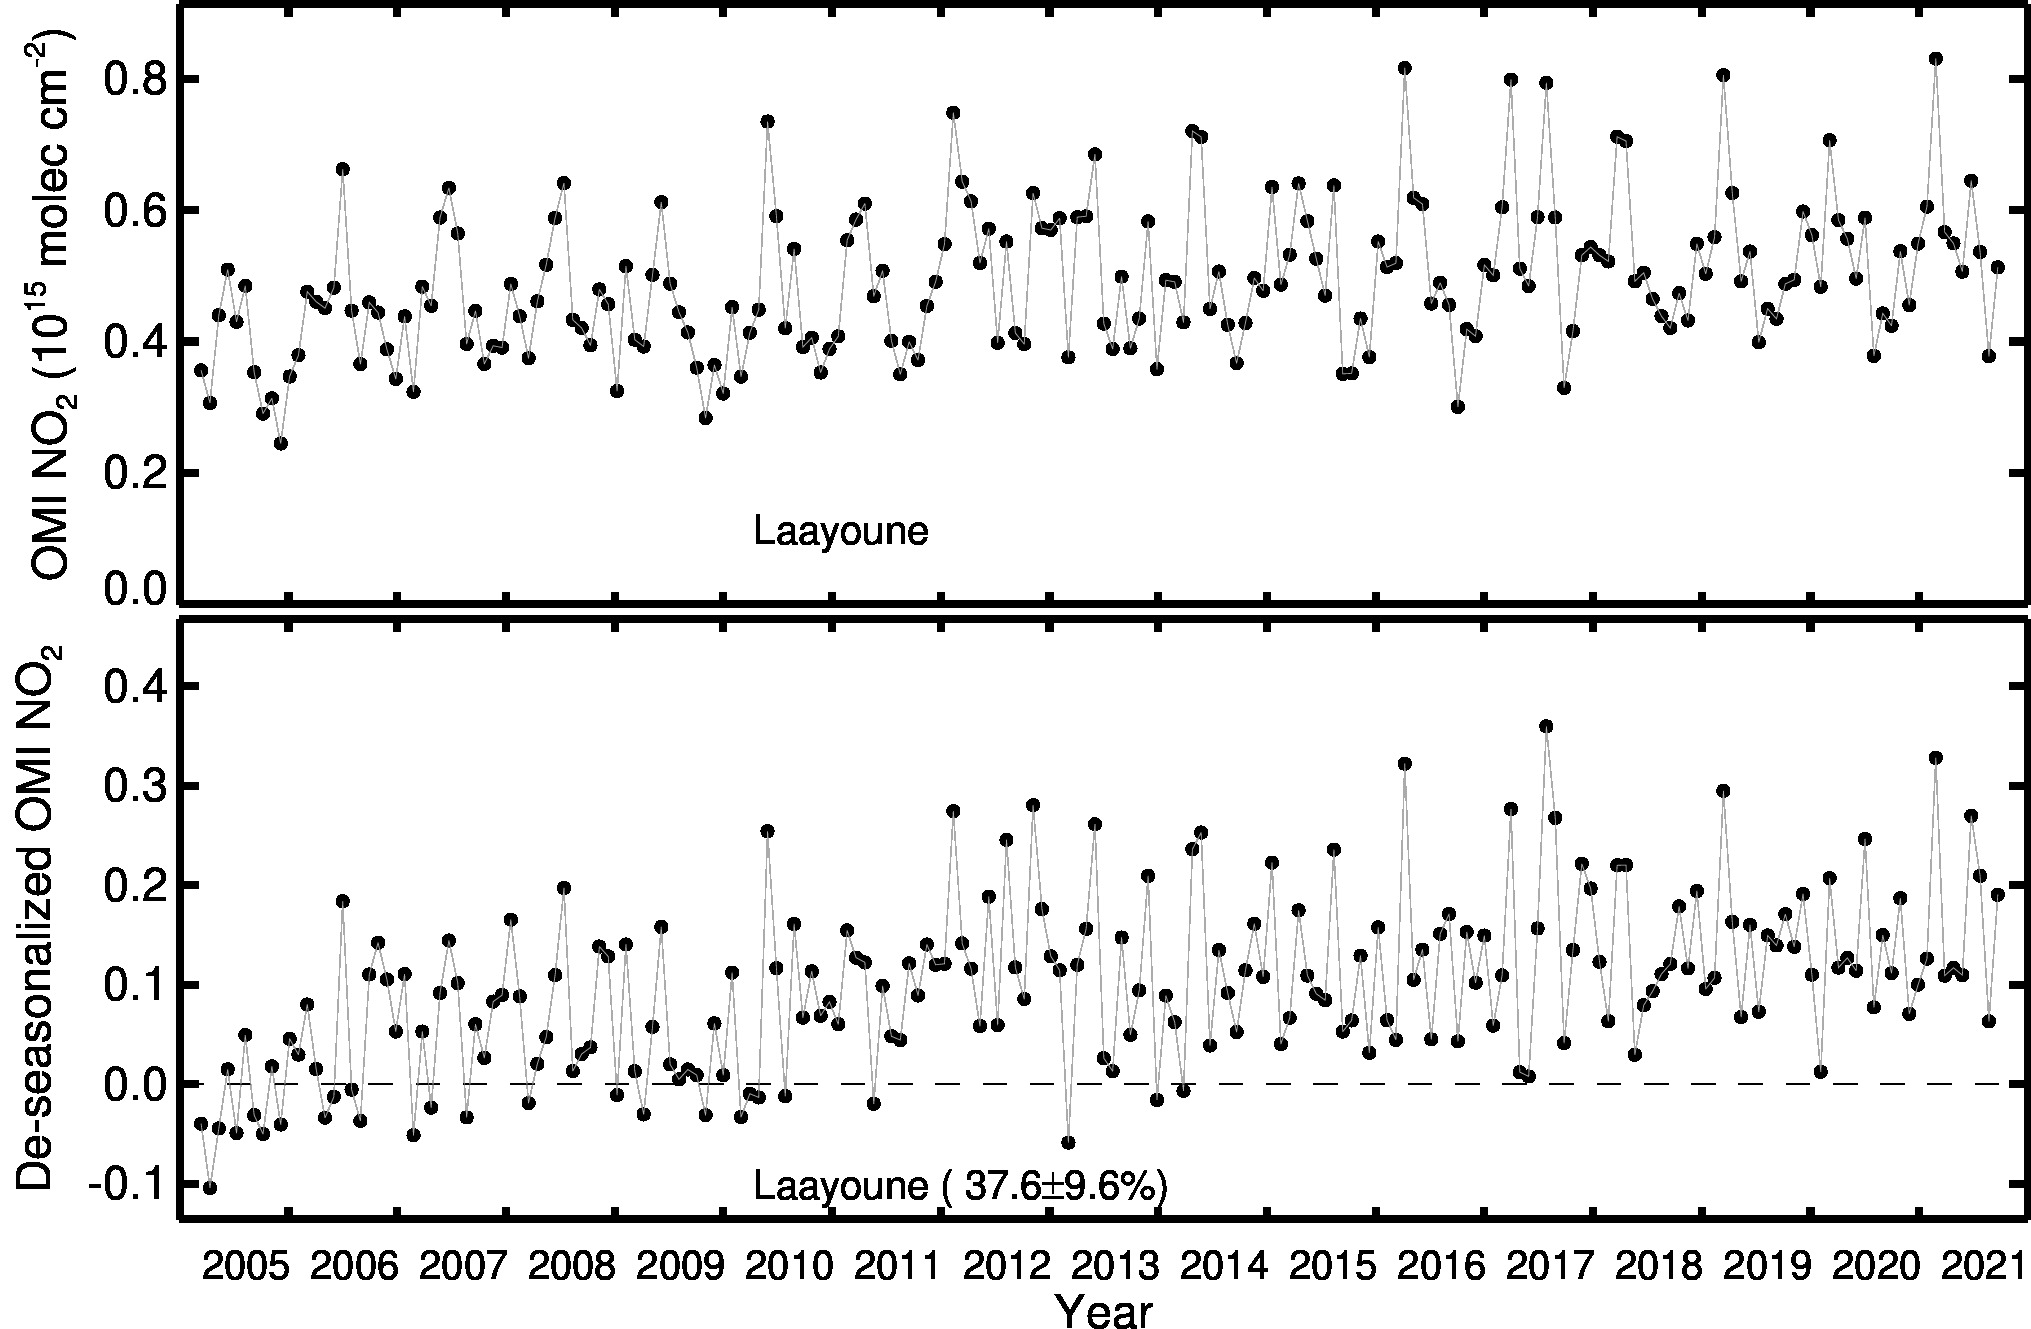 Laayoune Line Plot 2005-2021